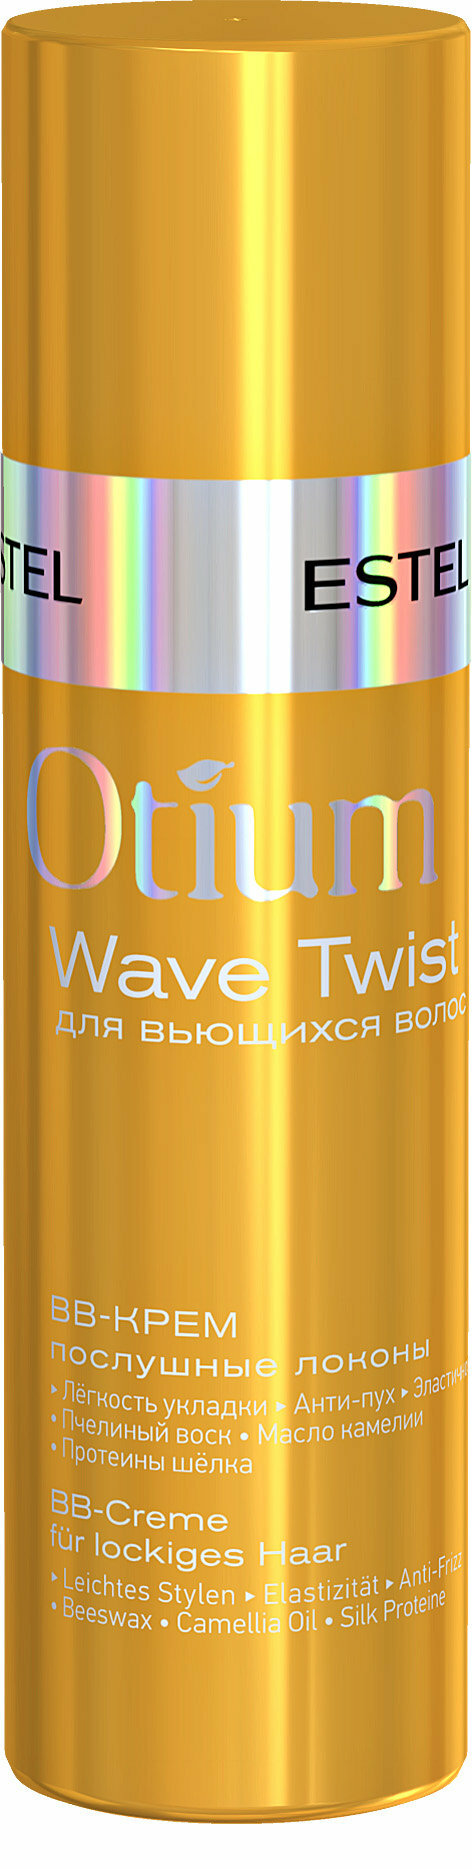 BB-крем для волос Estel Otium Wave Twist BB-Creme /100 мл/гр.